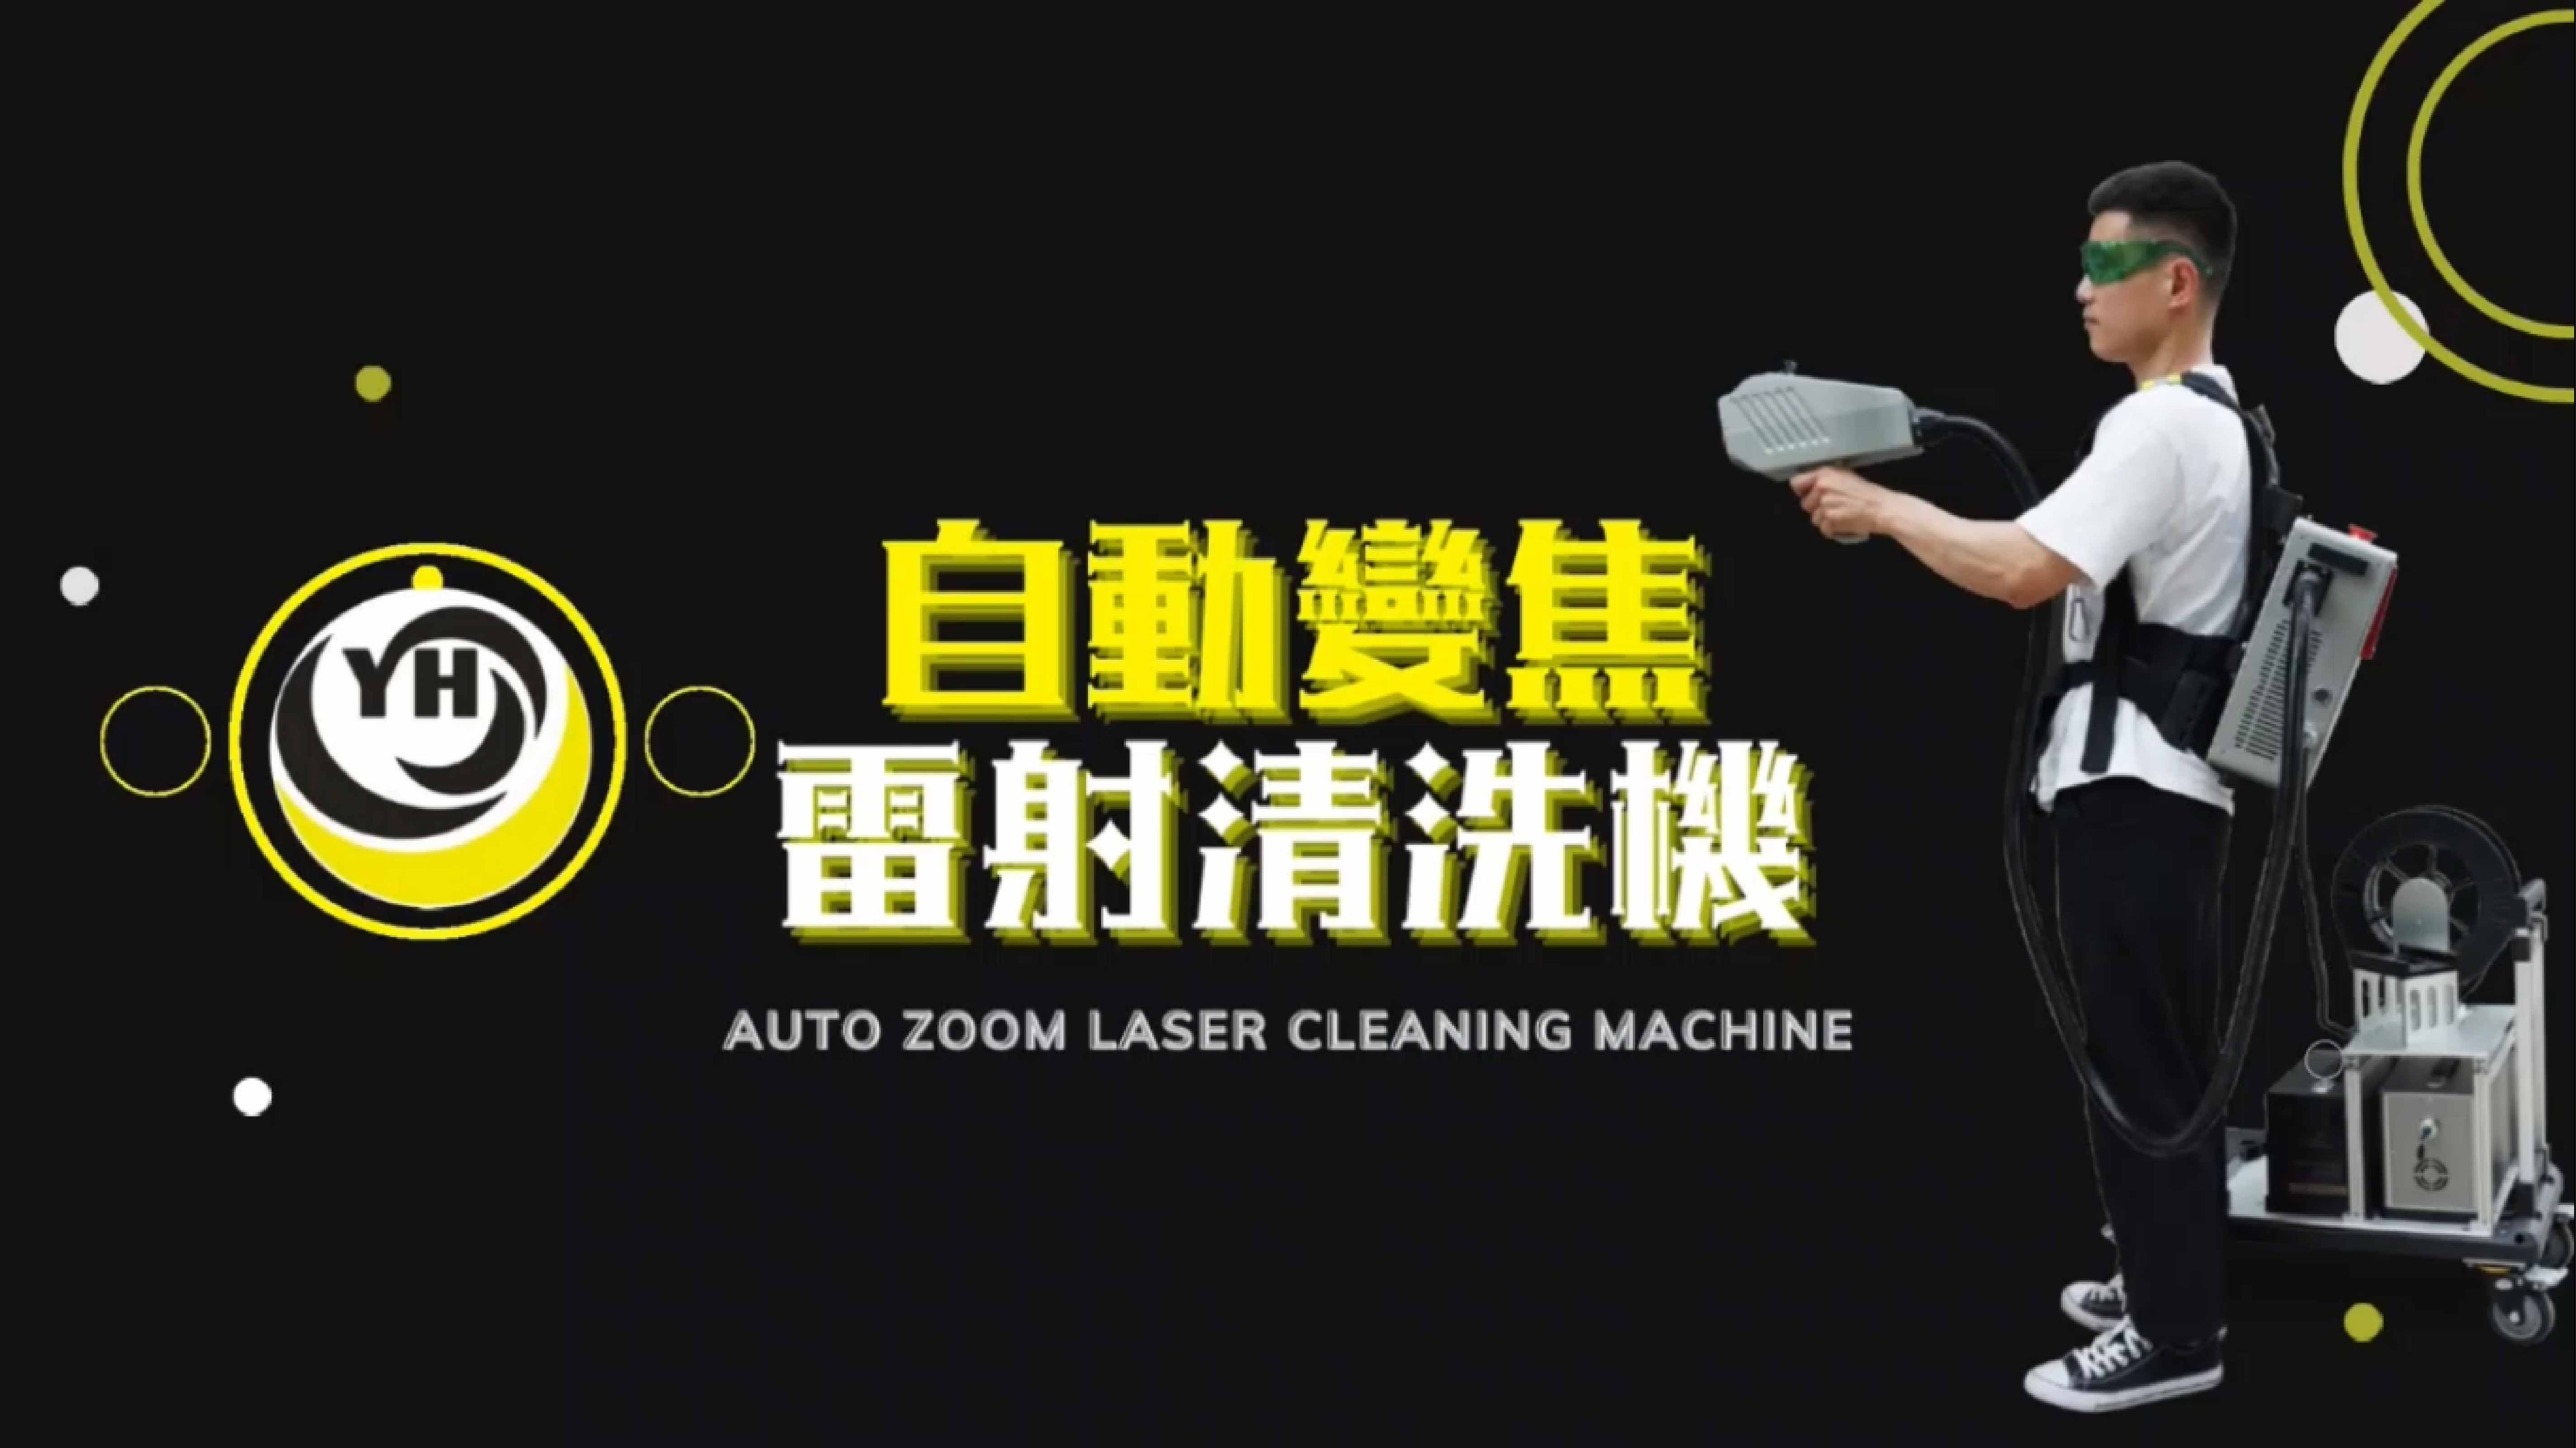 Auto Zoom Laser Cleaning Machine